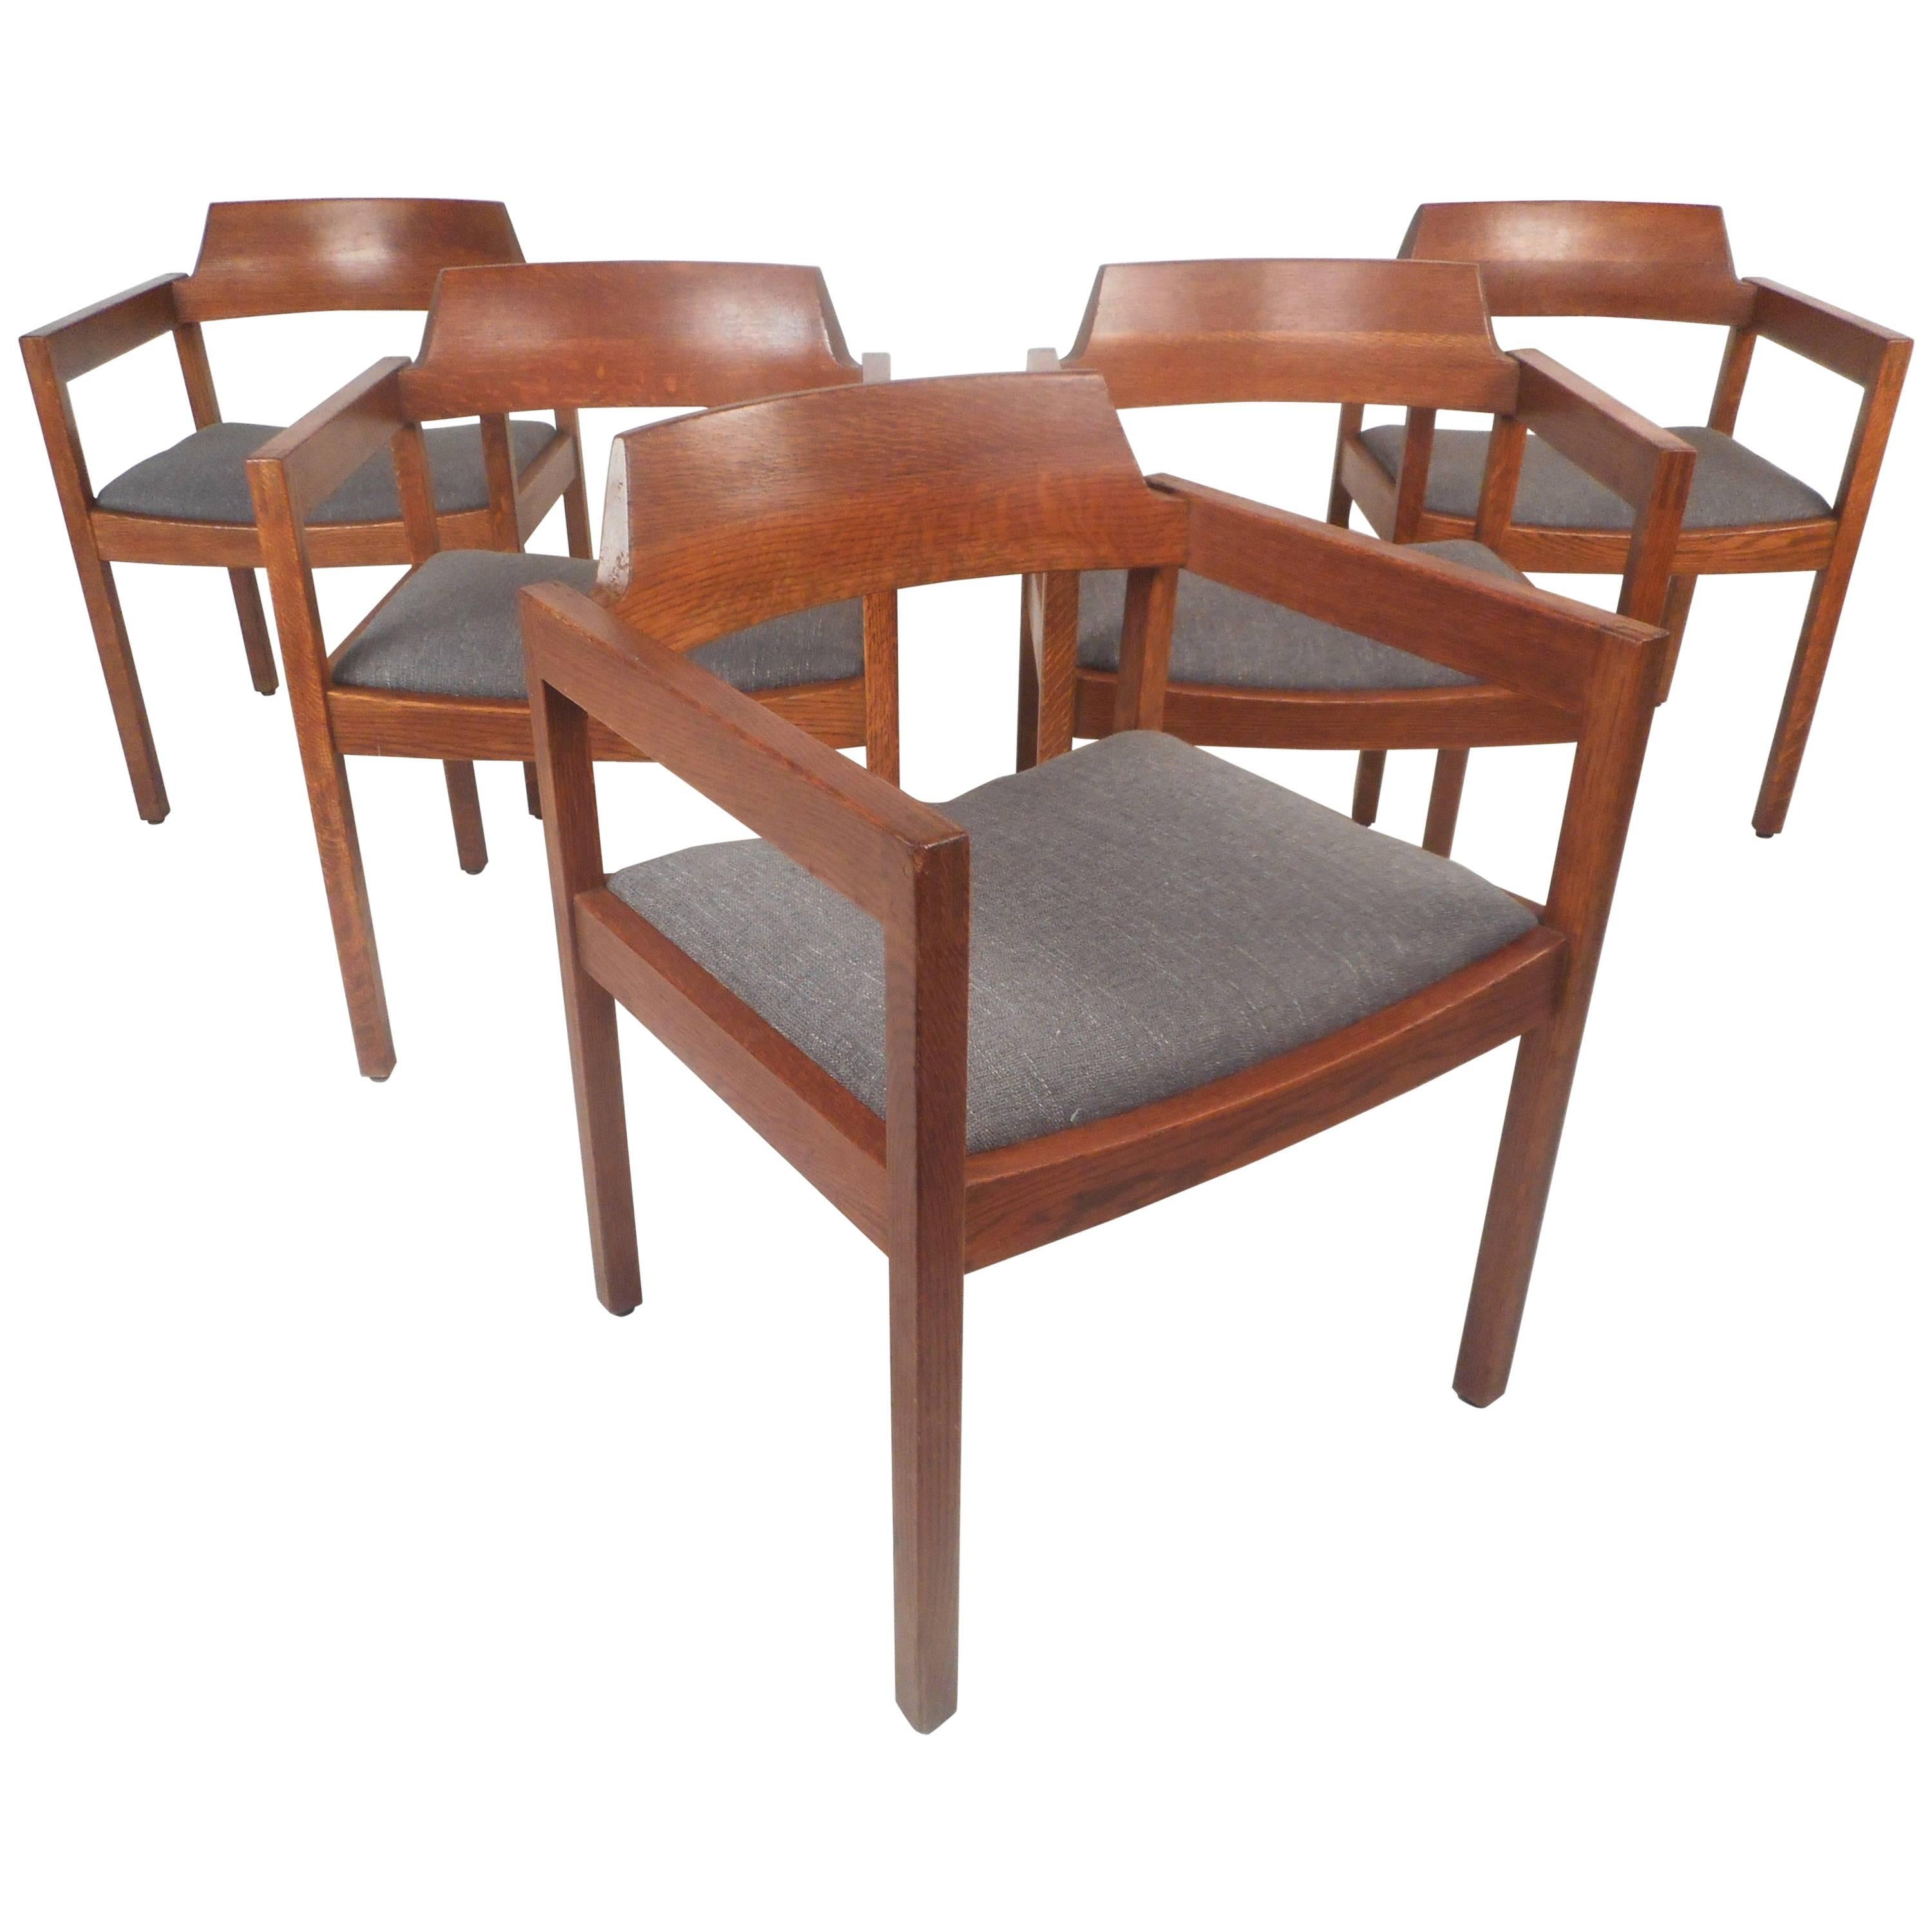 Set of Five Mid-Century Modern Walnut Dining Chairs by Gunlocke Chair Company